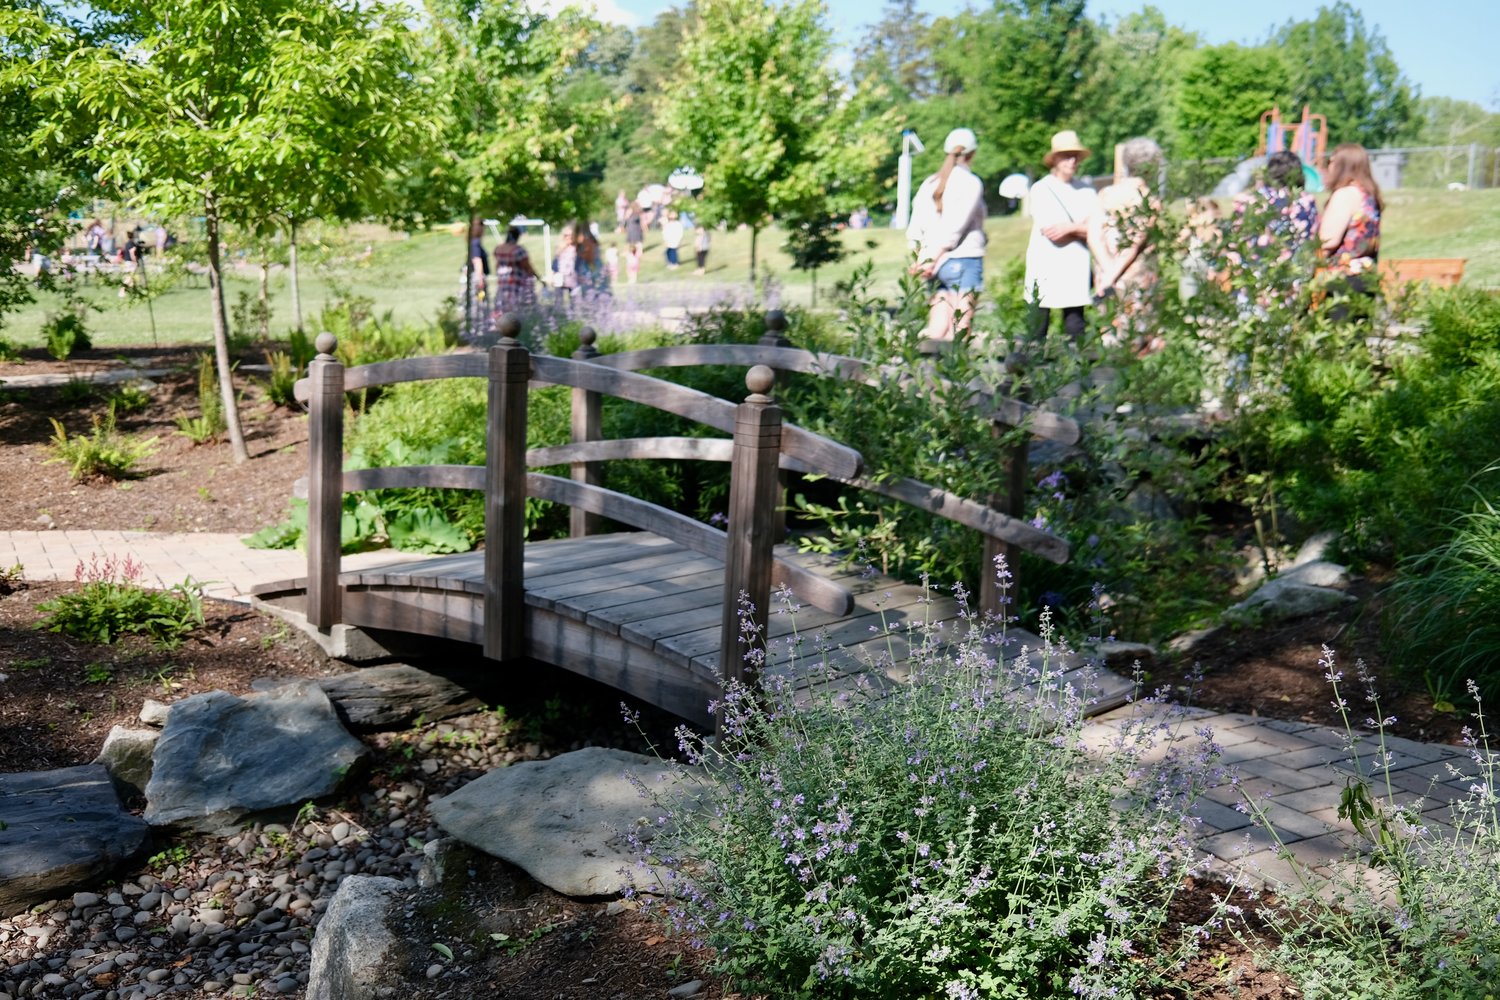 The rain garden includes a small wooden step bridge.